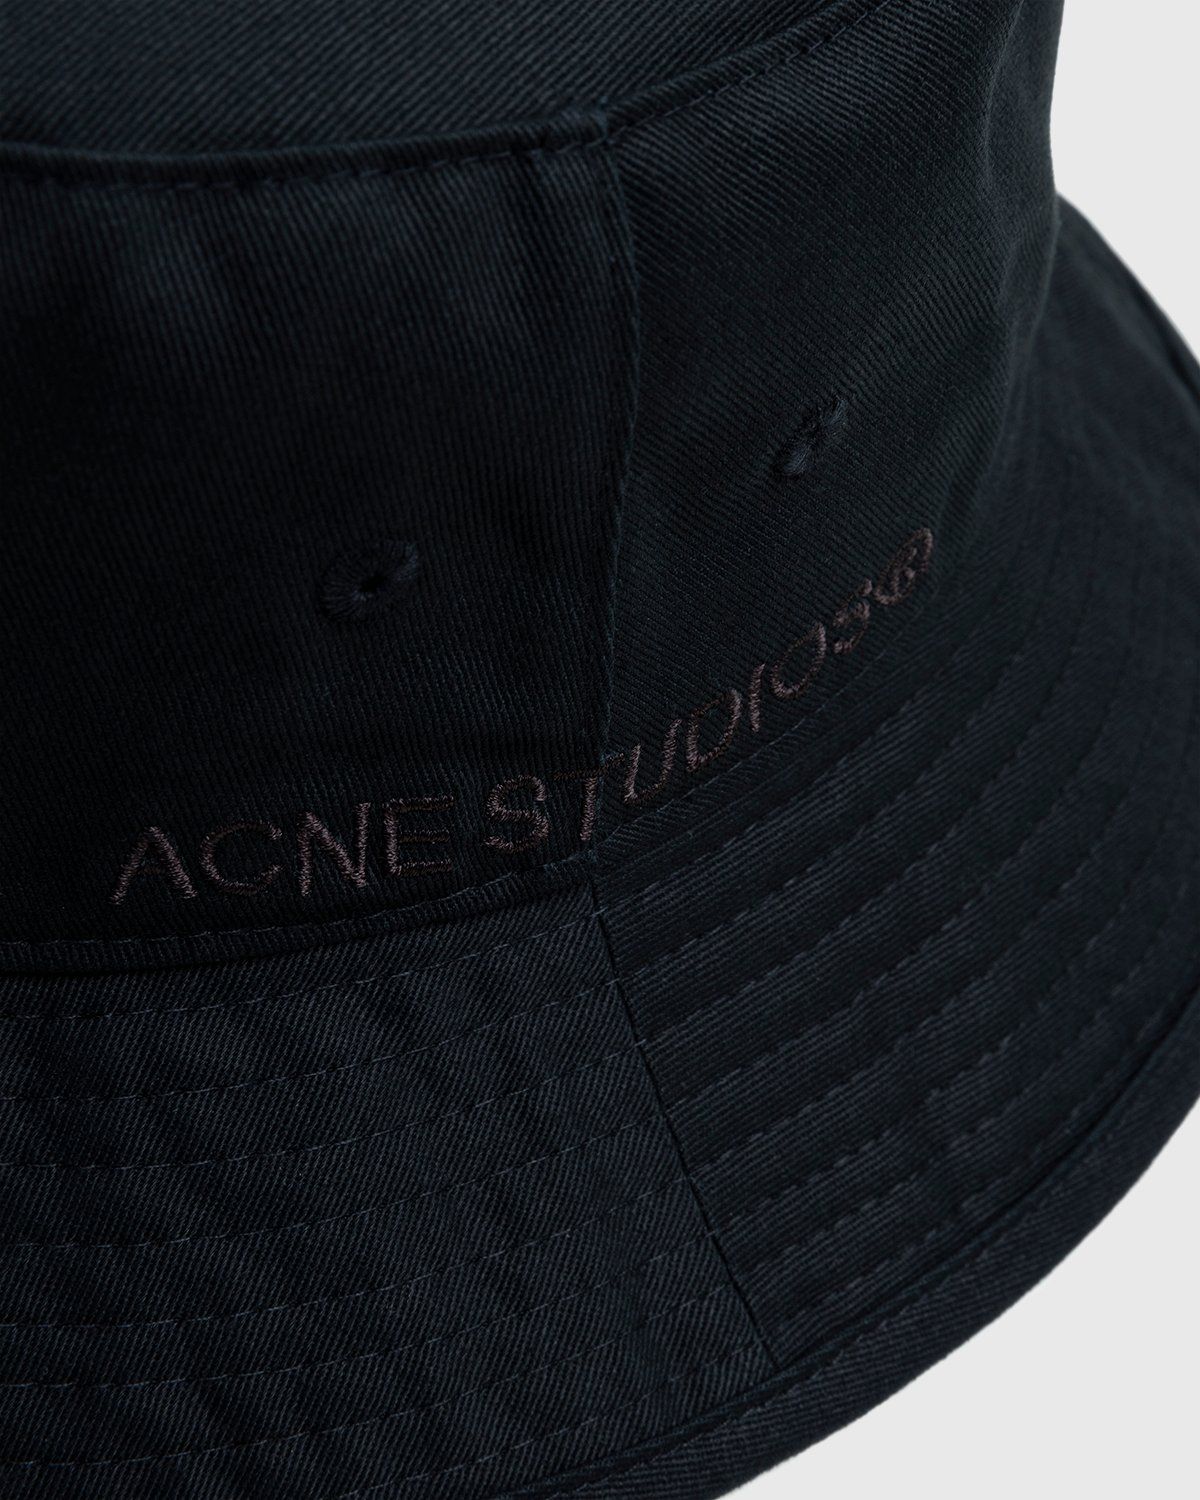 Acne Studios – Twill Bucket Hat Black - Bucket Hats - Black - Image 3